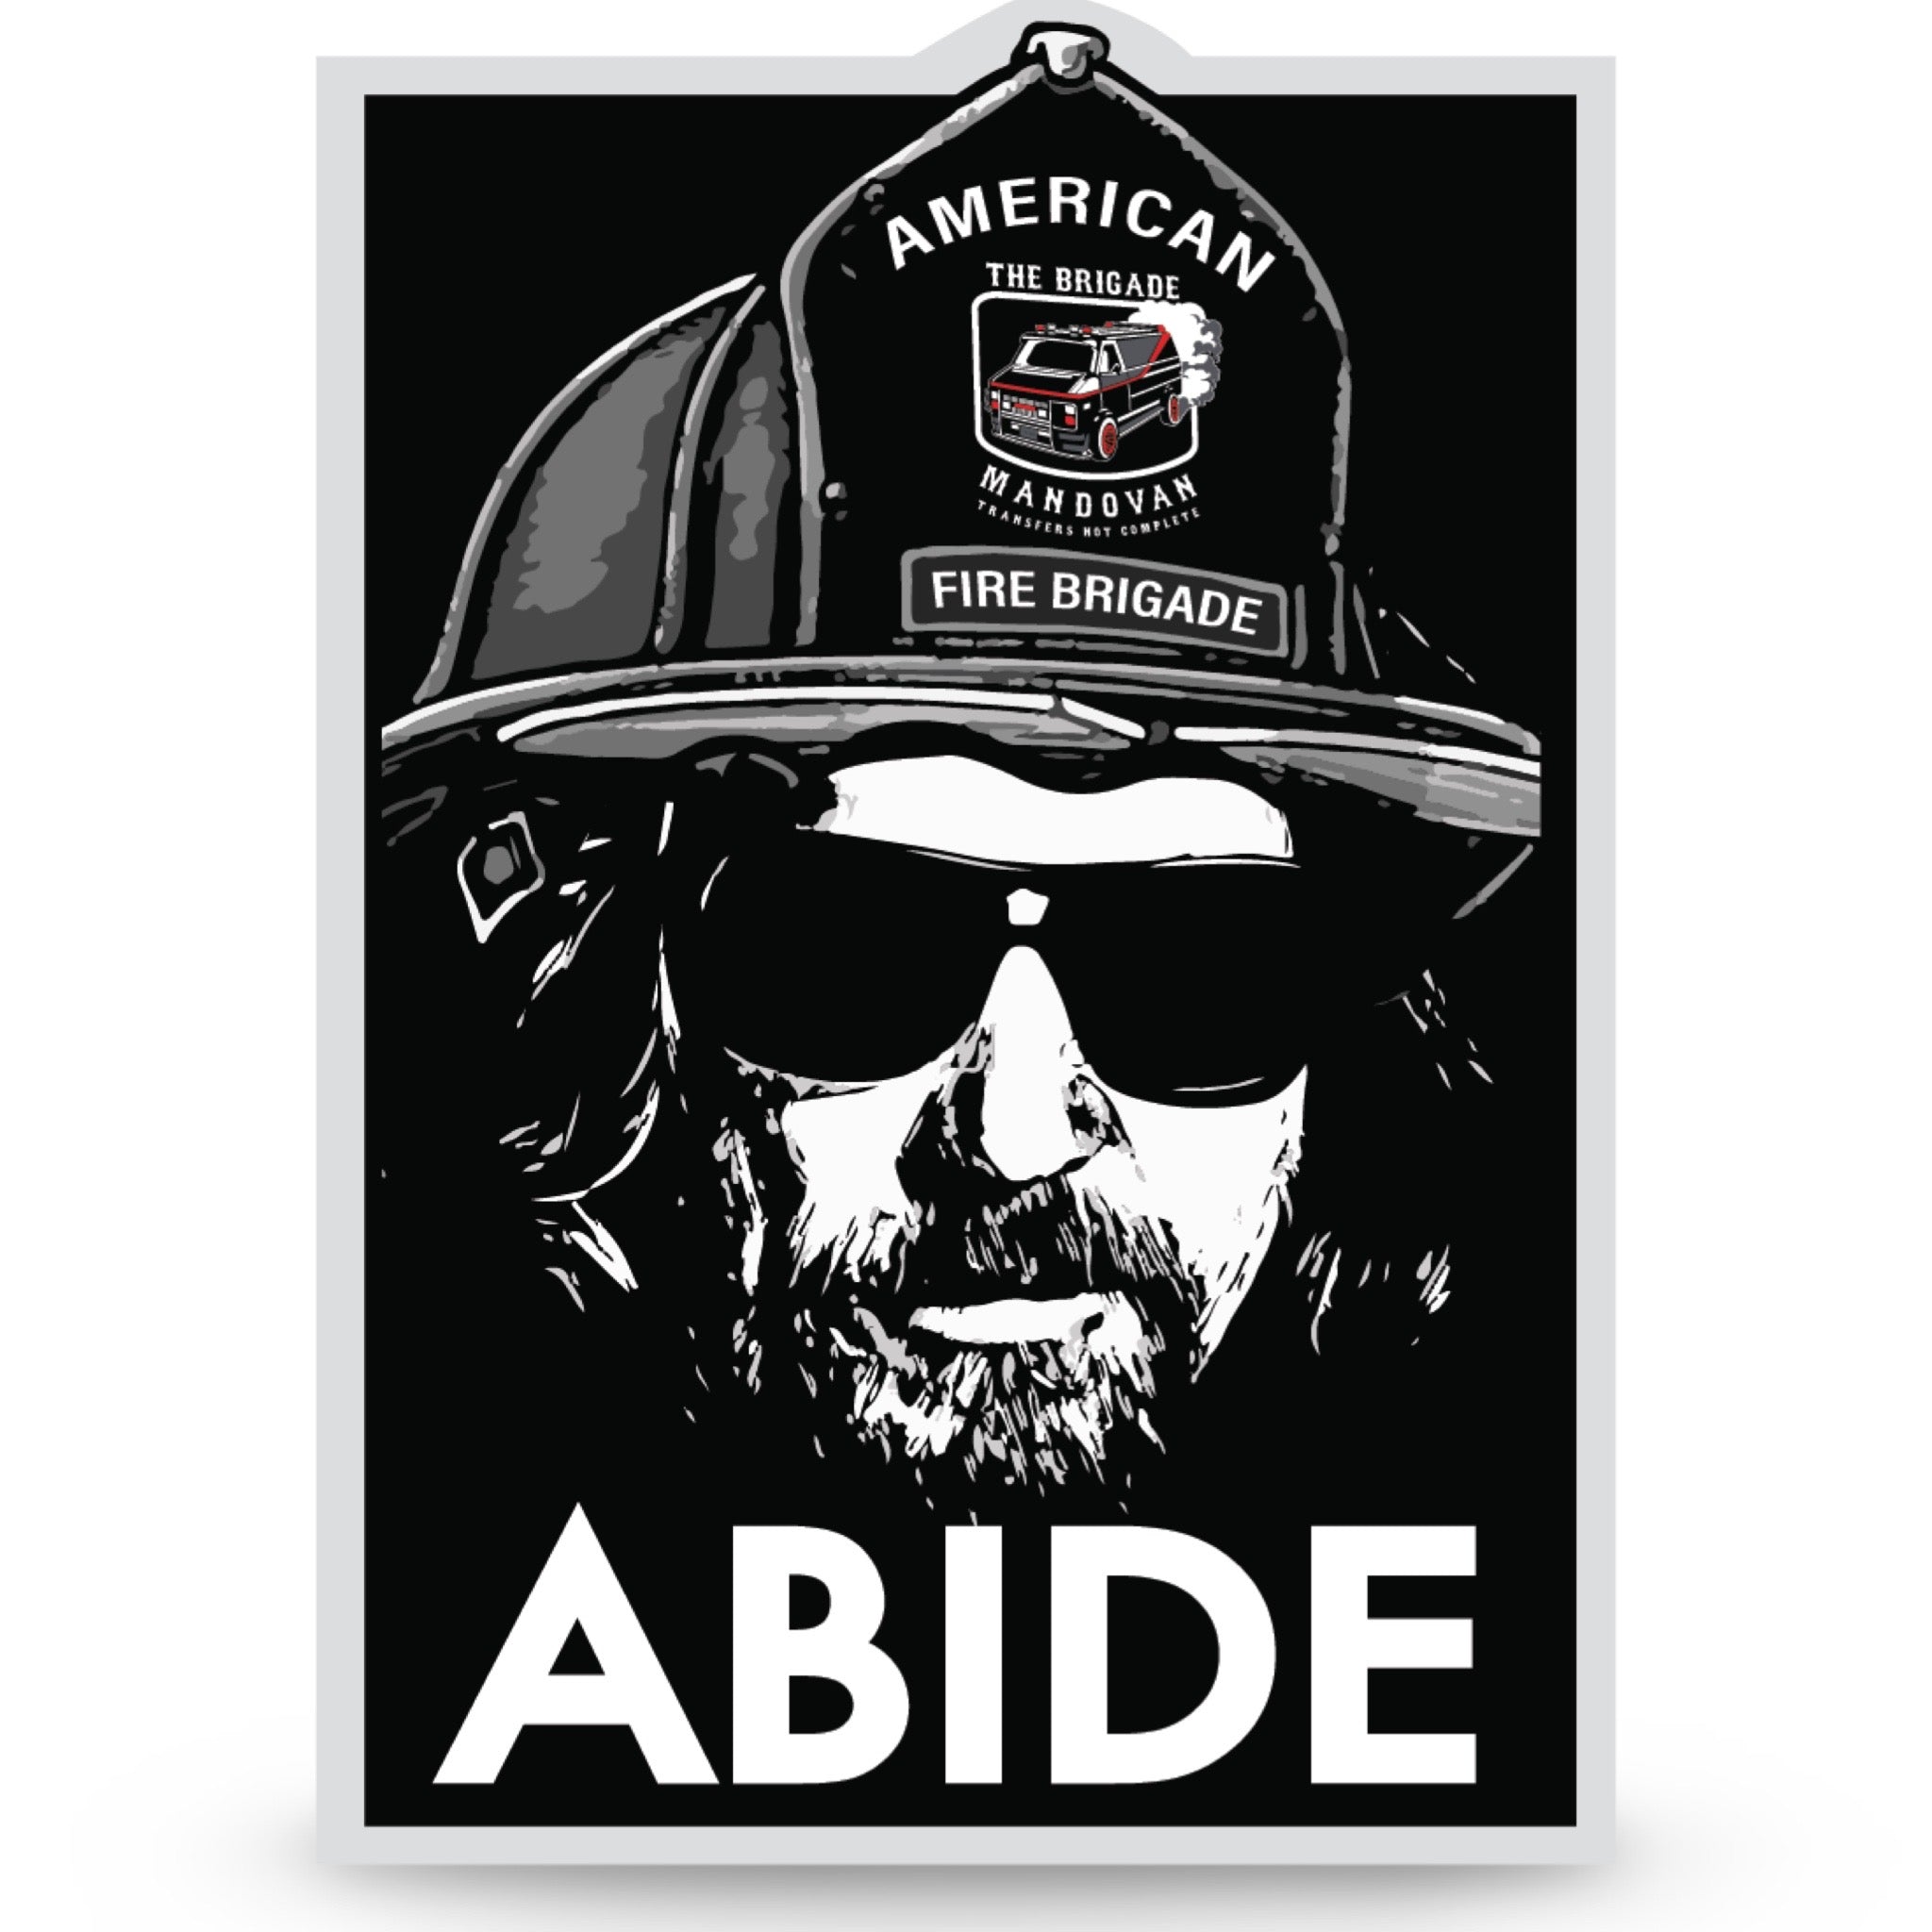 Abide Sticker